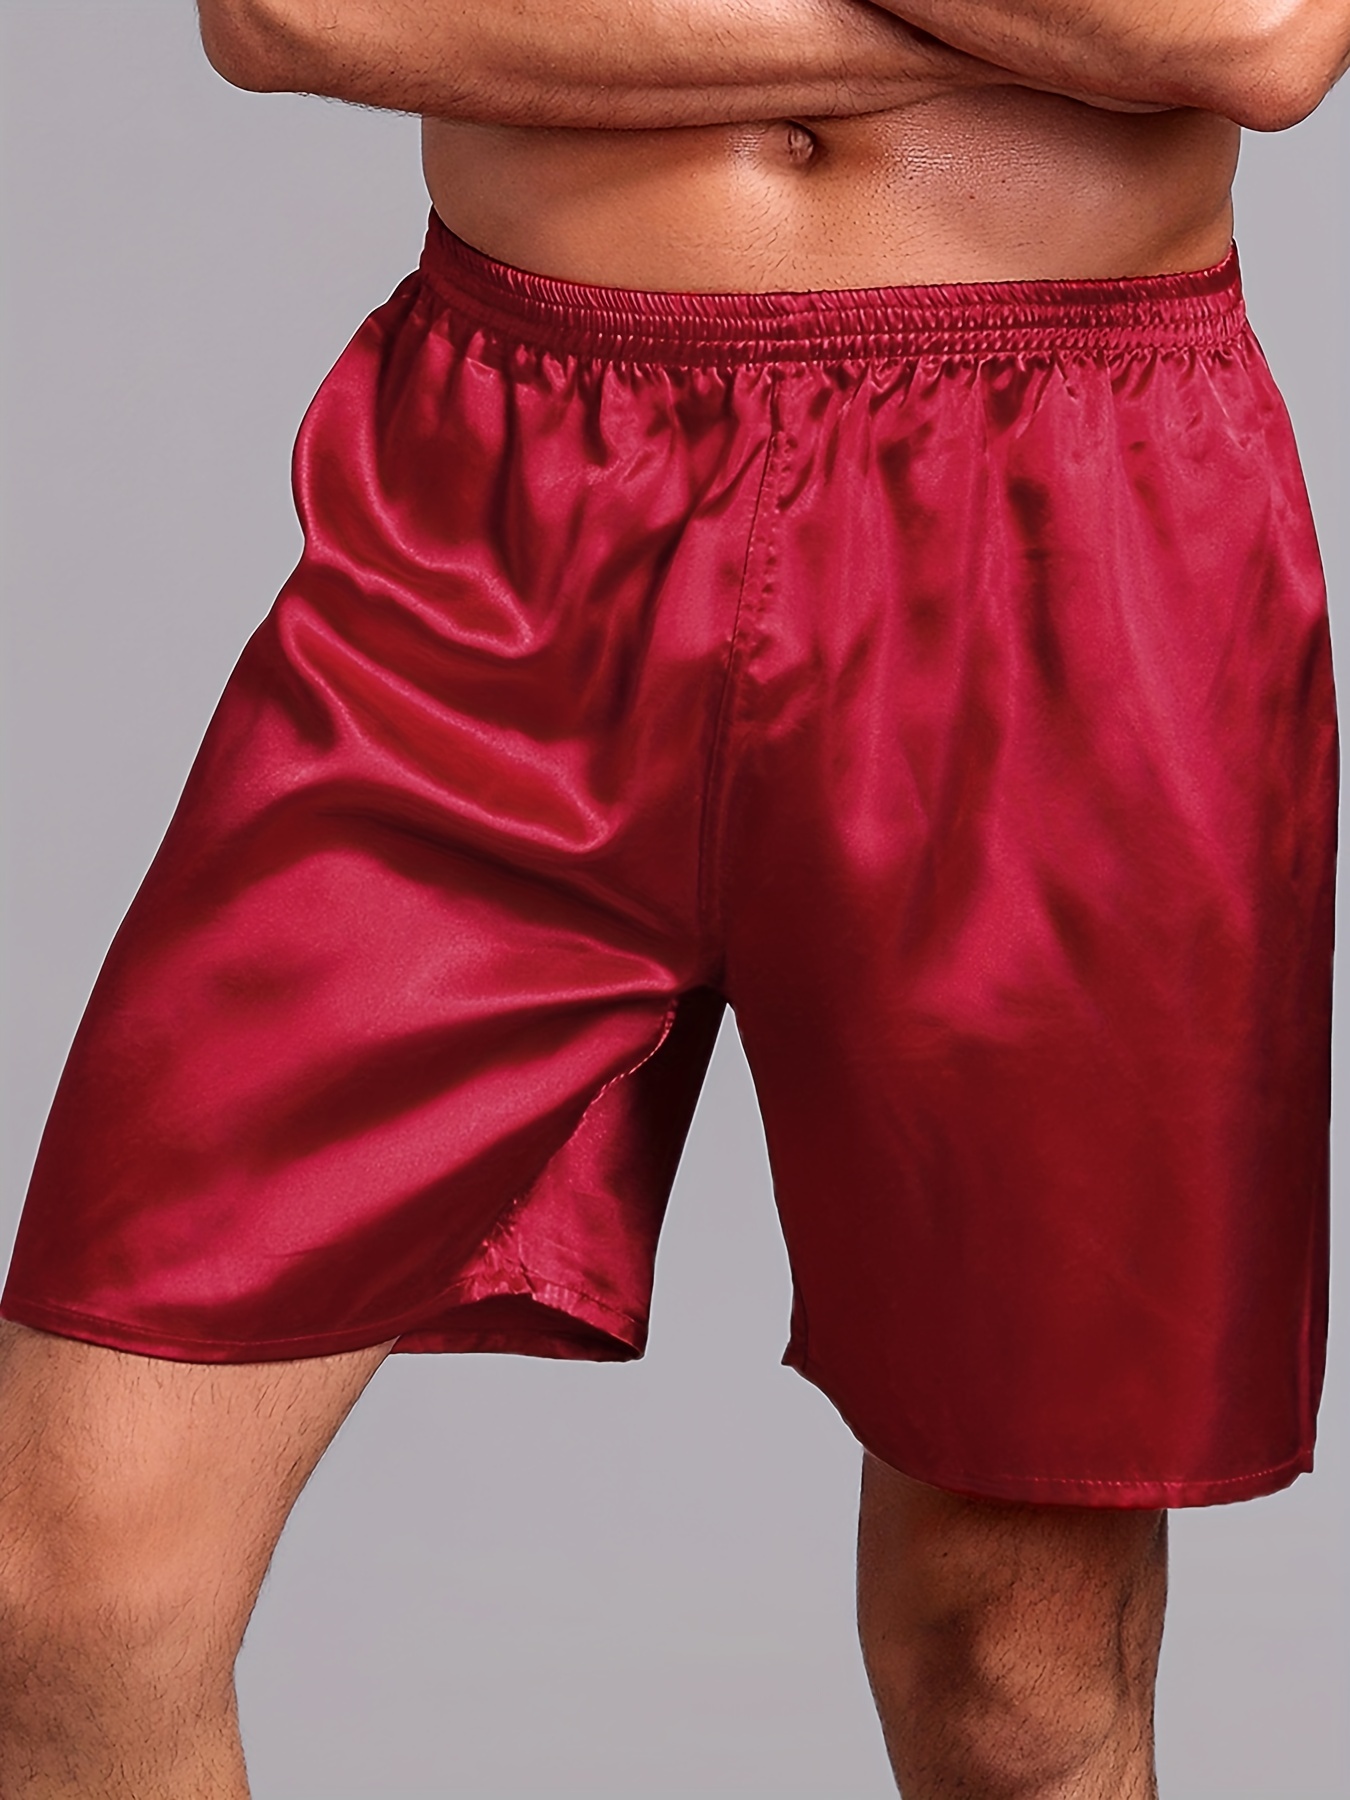 Men's Sleepwear Underwear Silk Satin Boxers Shorts Nightwear Shorts  Comfortable